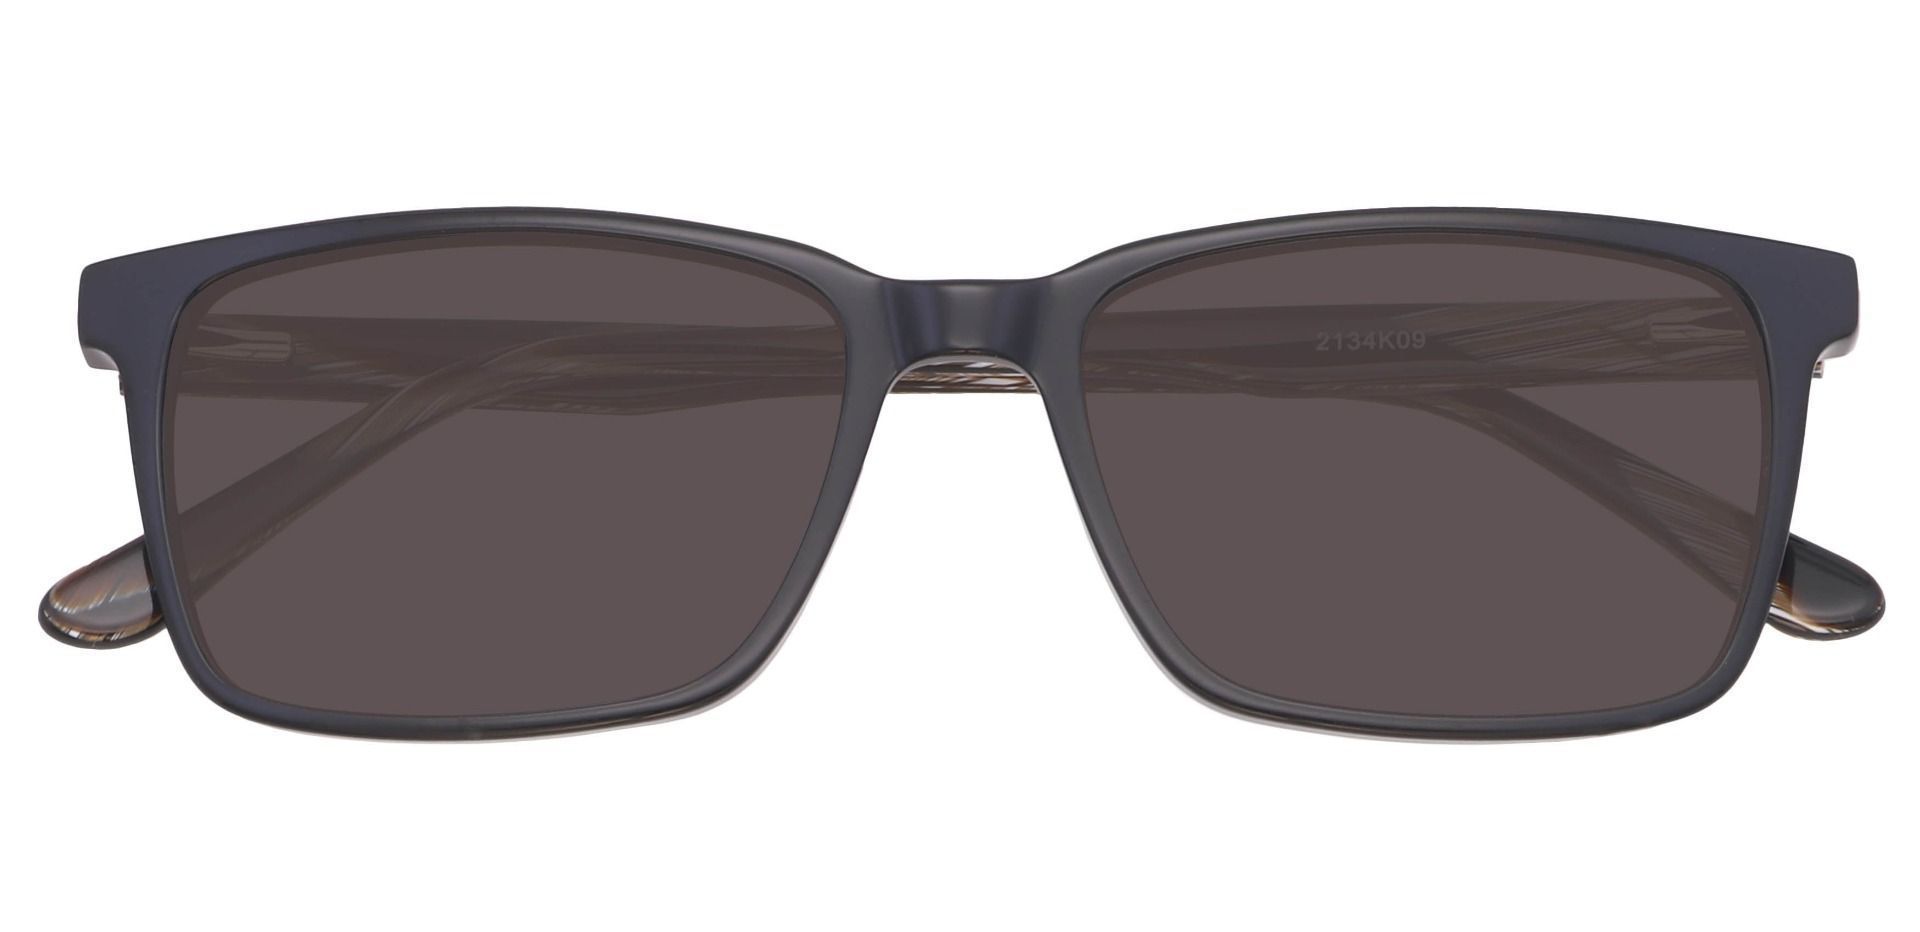 Venice Rectangle Reading Sunglasses - Black Frame With Gray Lenses